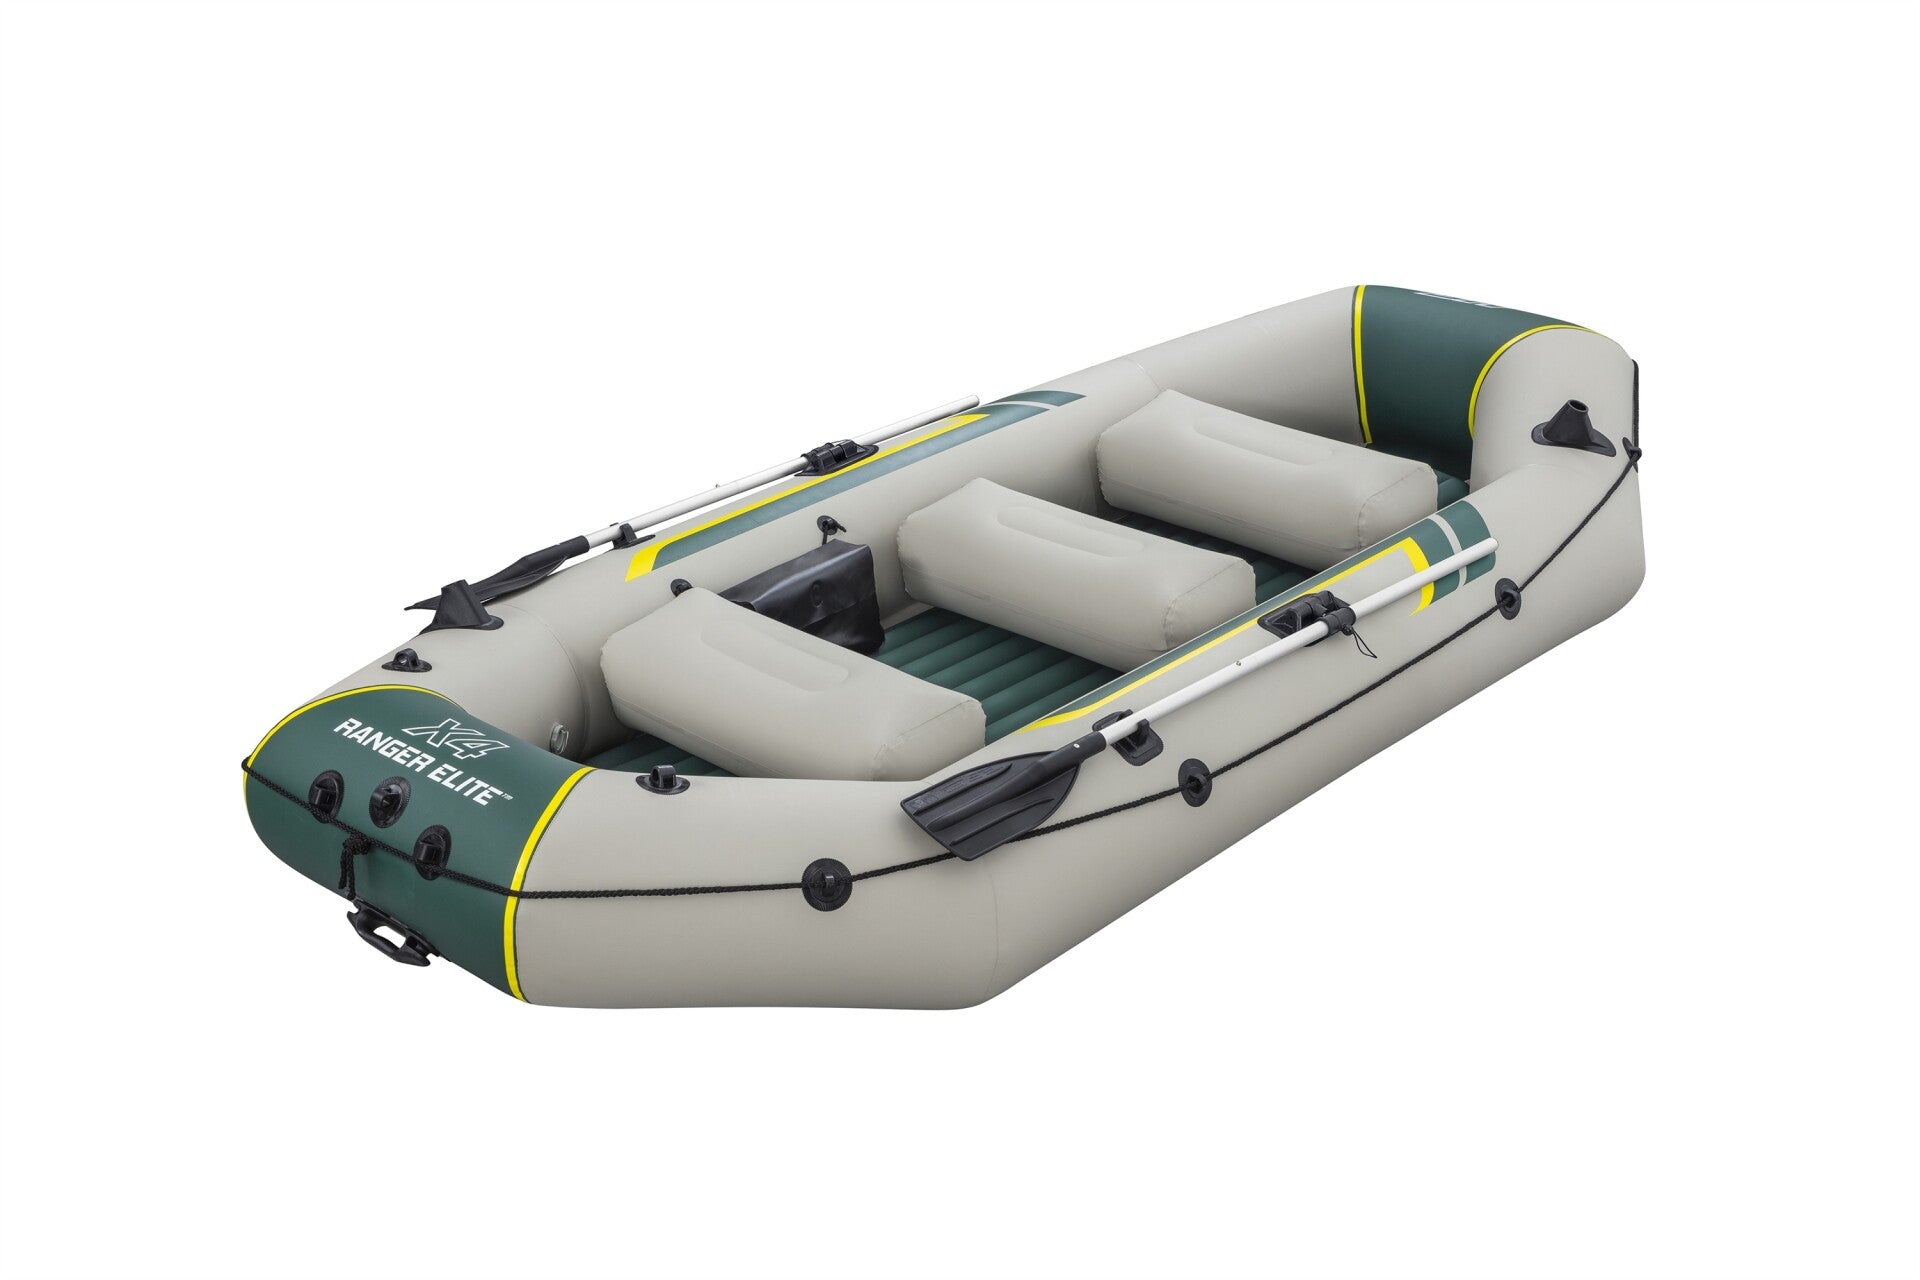 Hydro-Force Ranger Elite X4 Raft Set 10'6" x 58"-Green